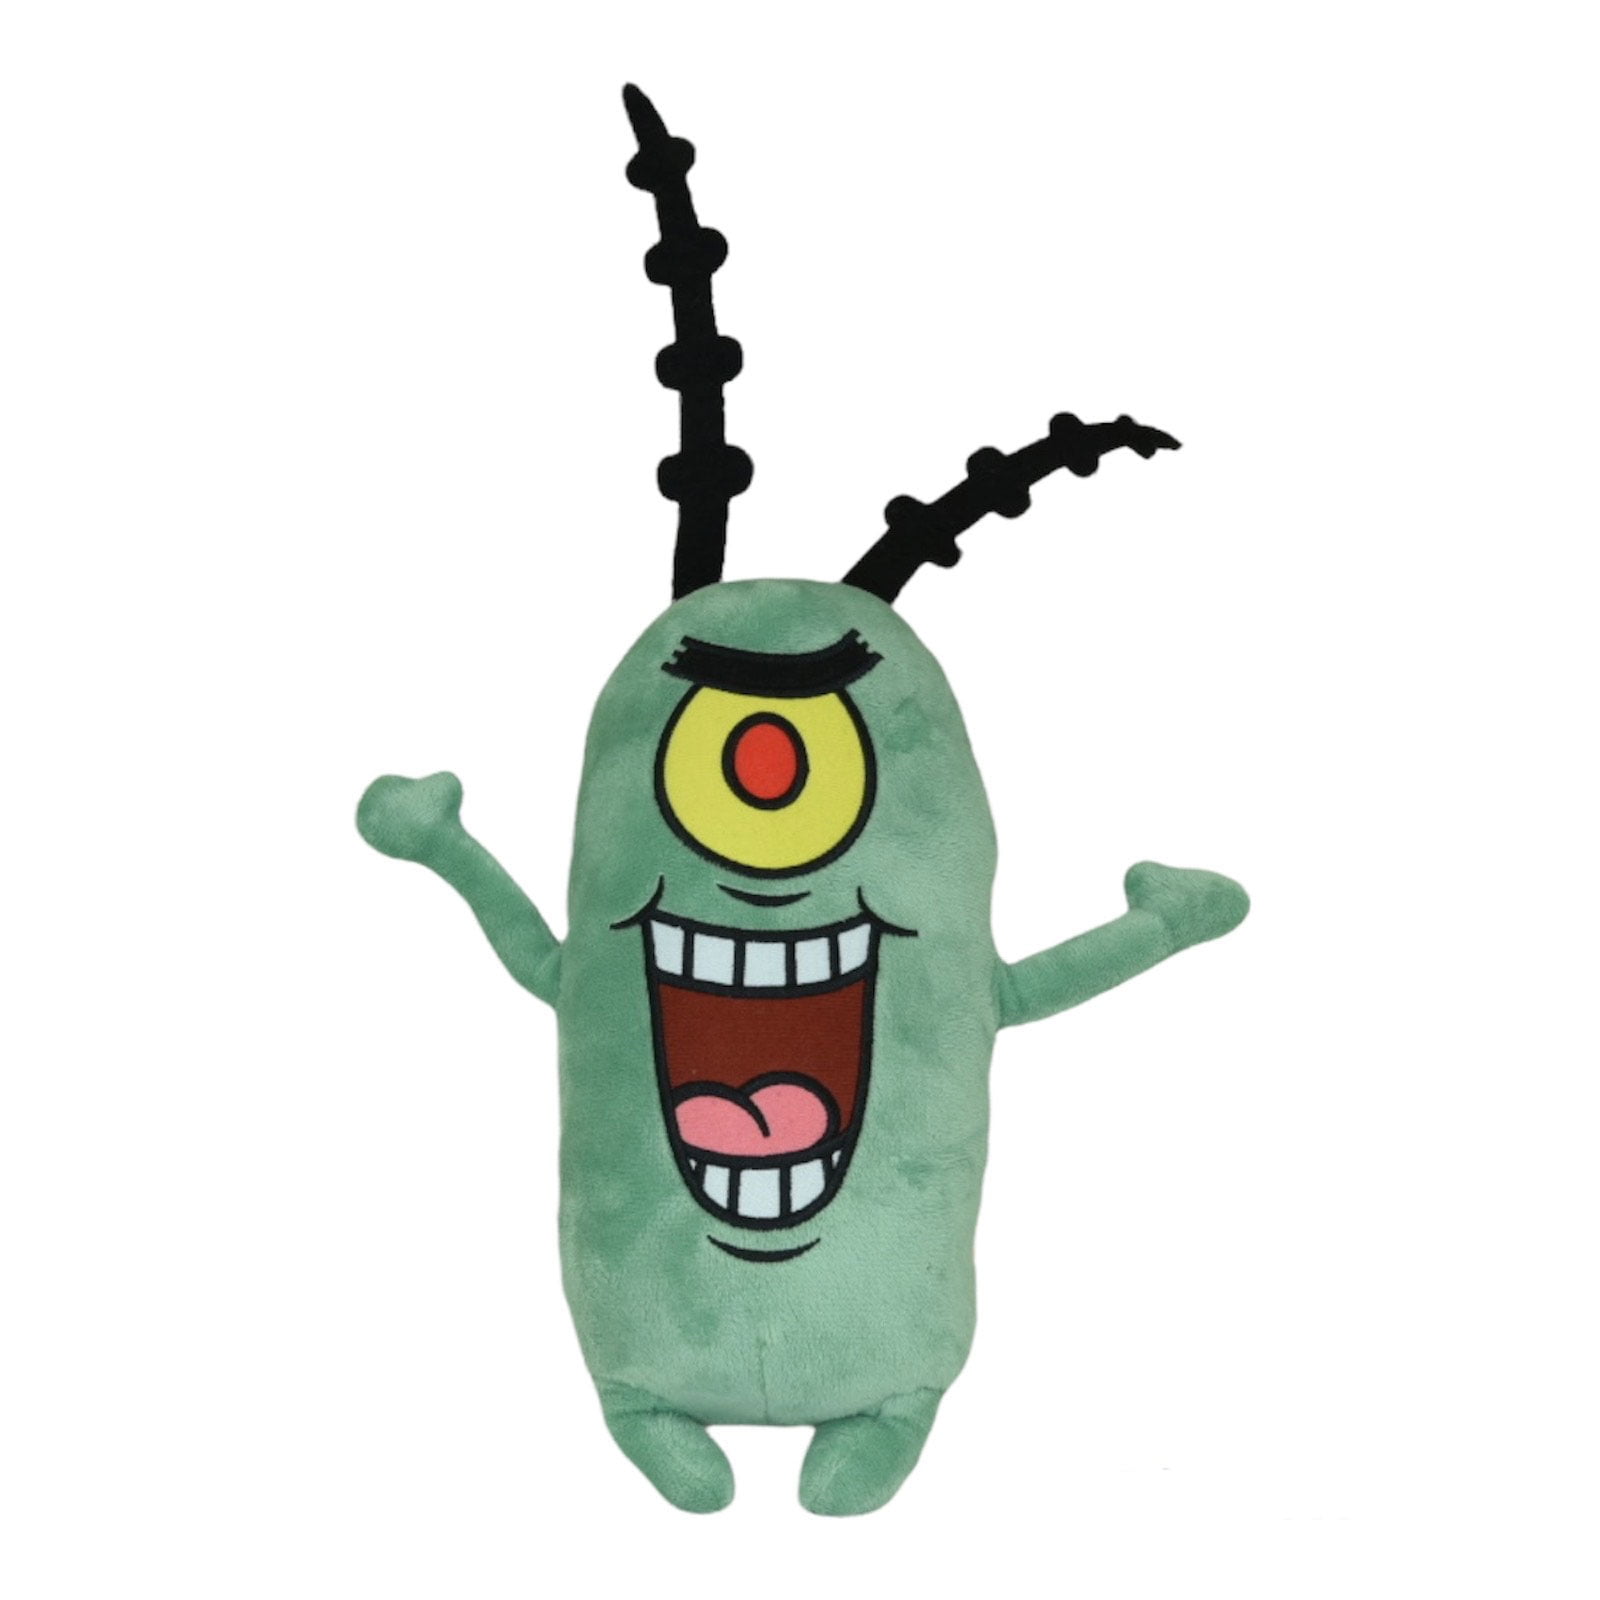 Spongebob Squarepants 12 Inch Plankton Stuffed Plush Toy Character